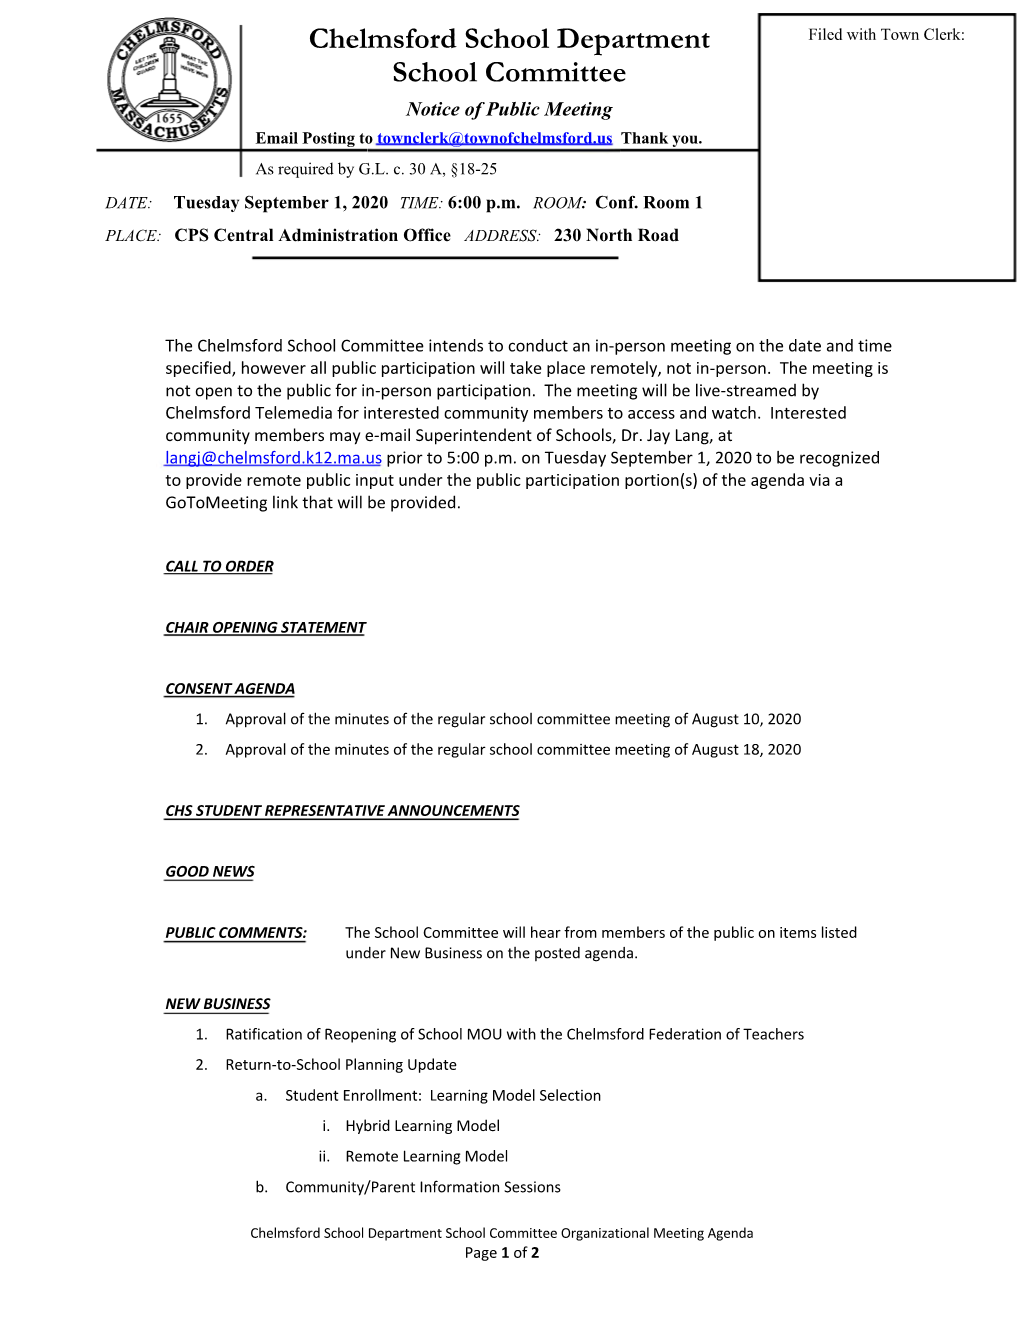 Chelmsford School Department School Committee Organizational Meeting Agenda Page 1 of 2 C